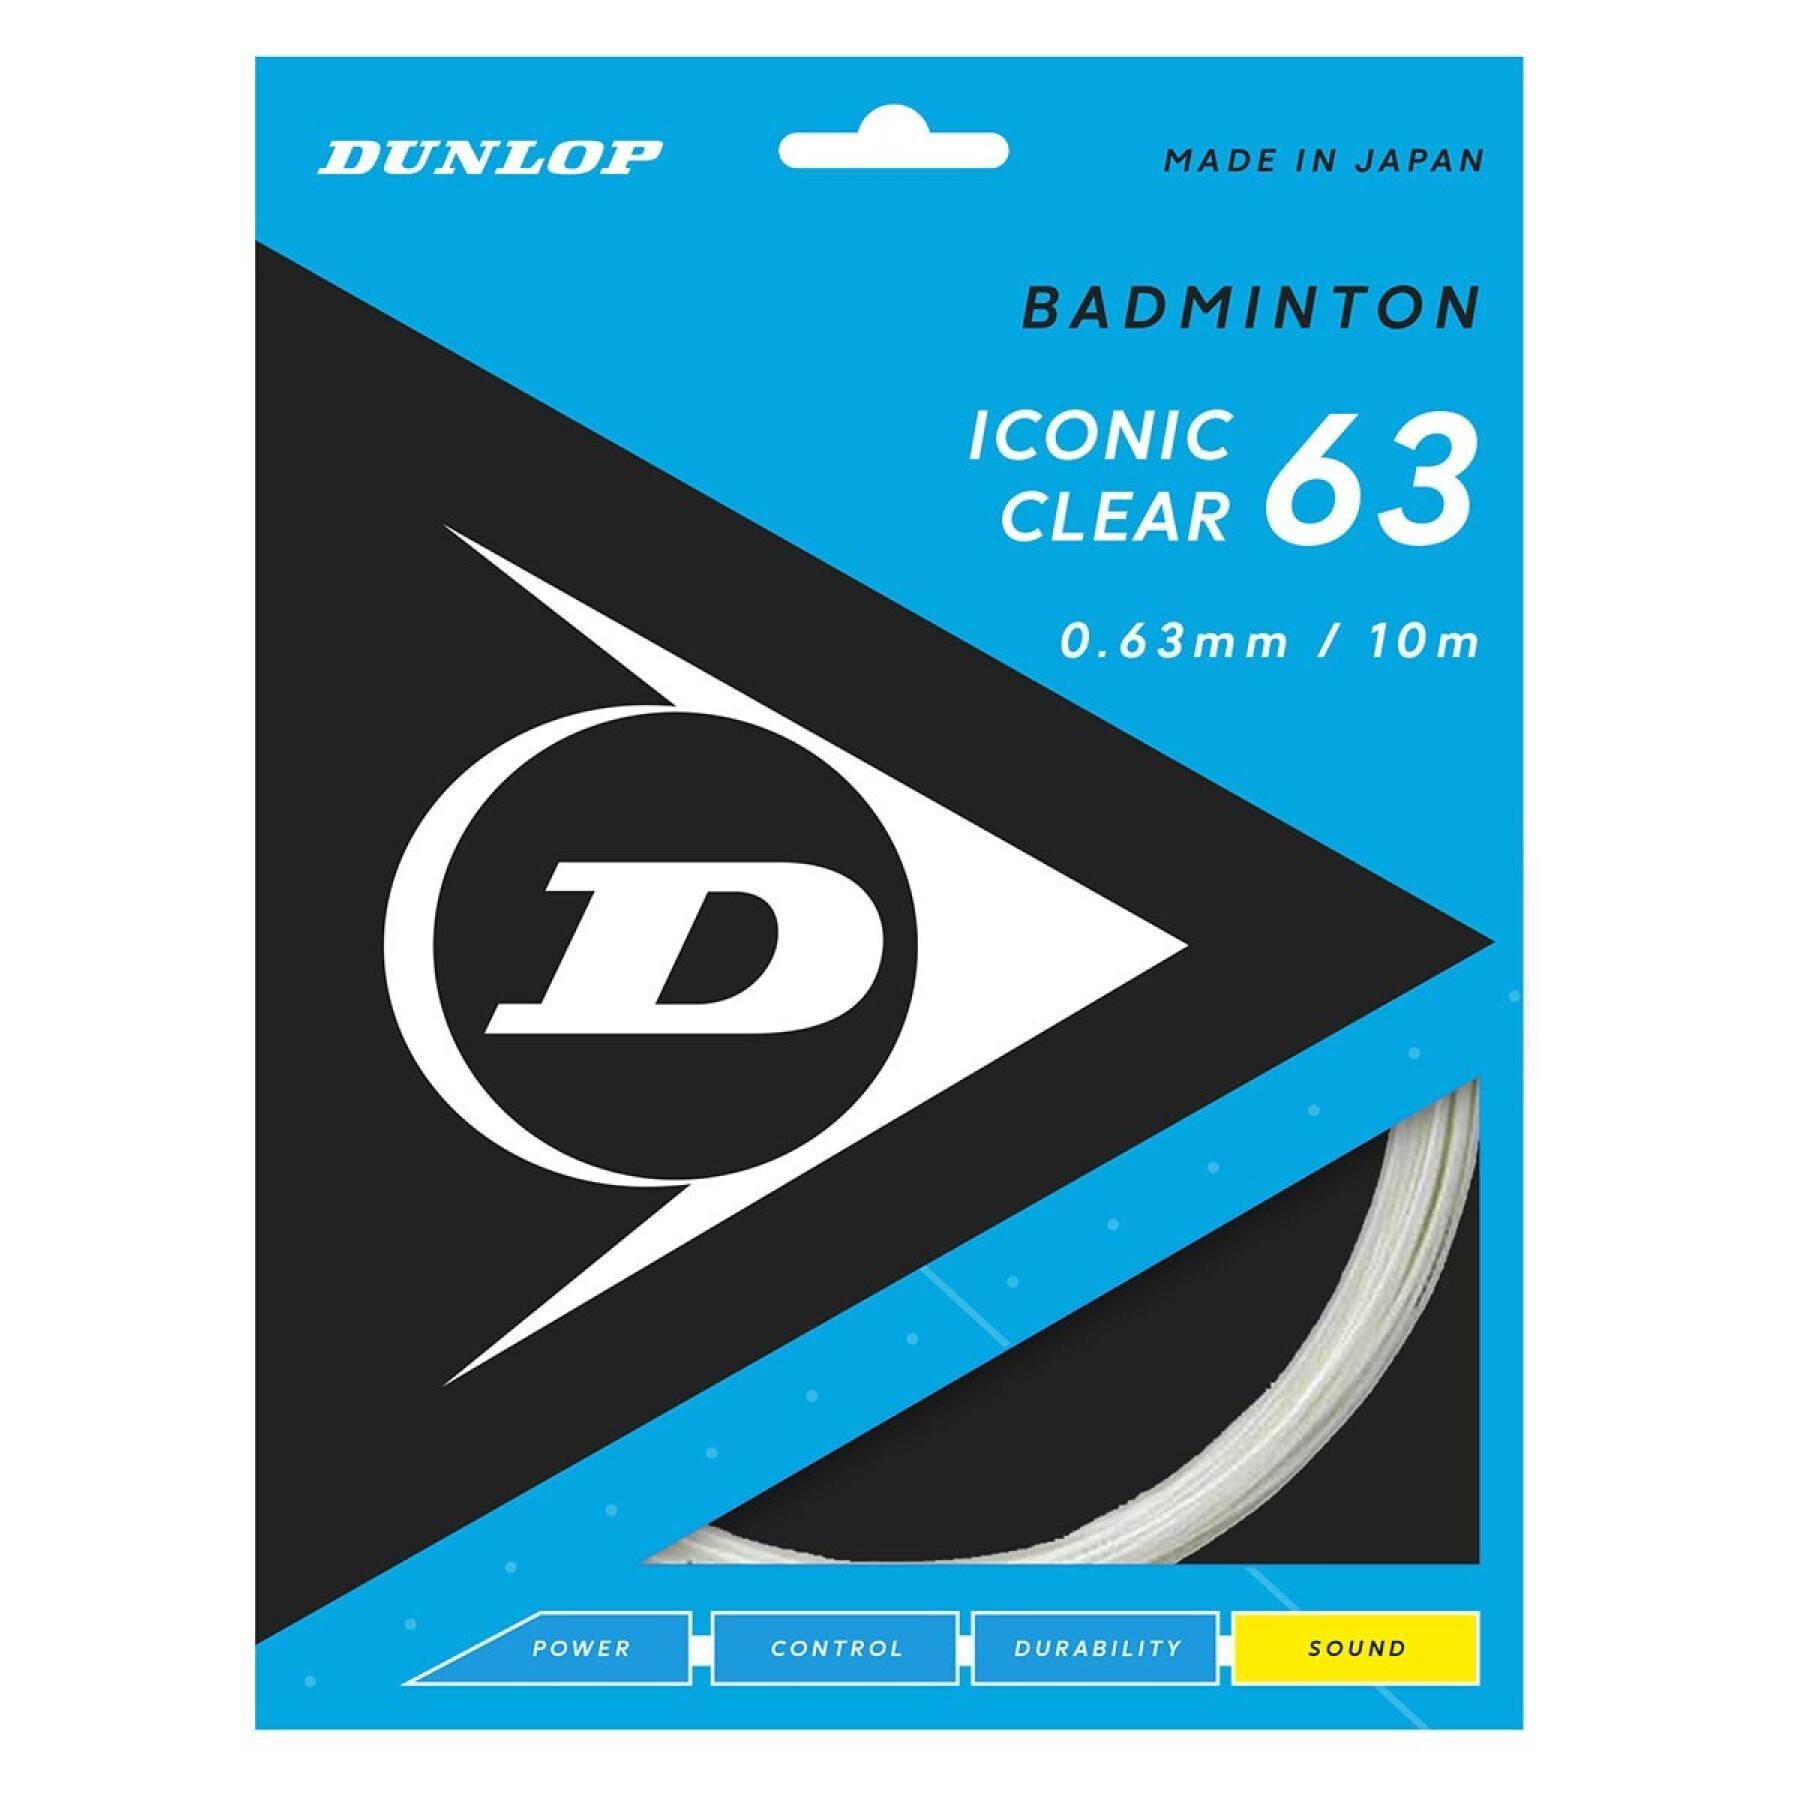 Corde da badminton Dunlop Iconic Clear 10 m